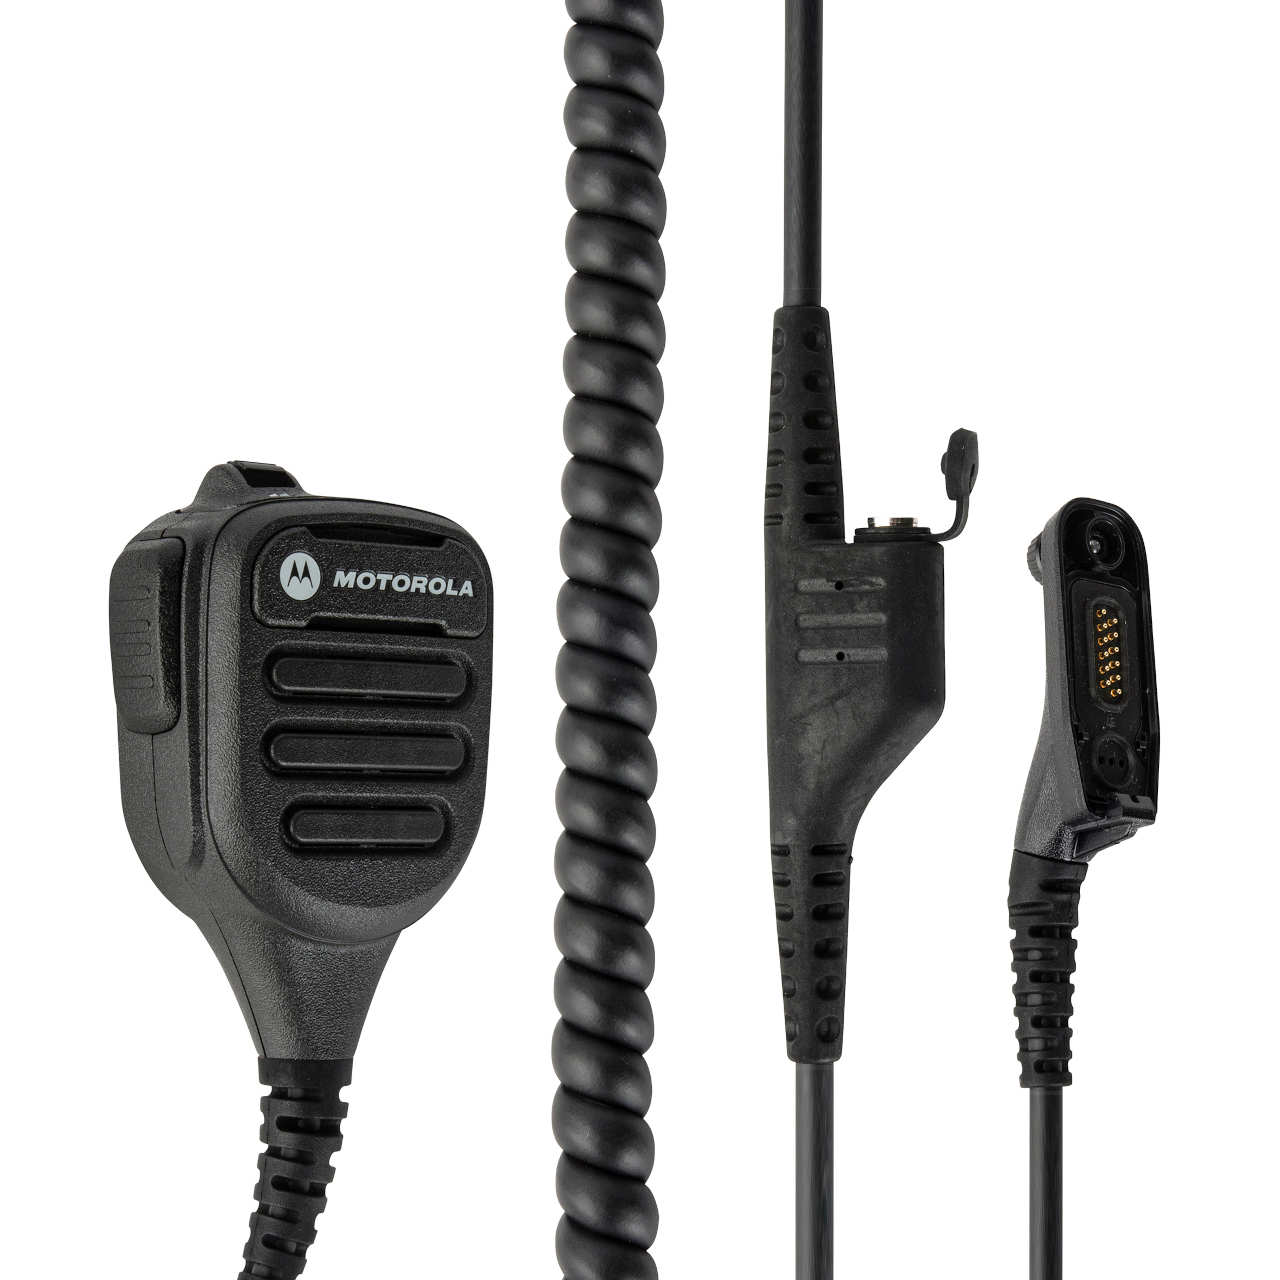 Motorola IMPRESS Abgesetztes Lautsprecher-Mikrofon RSM mit Geräuschunterdrückung NNTN8383B